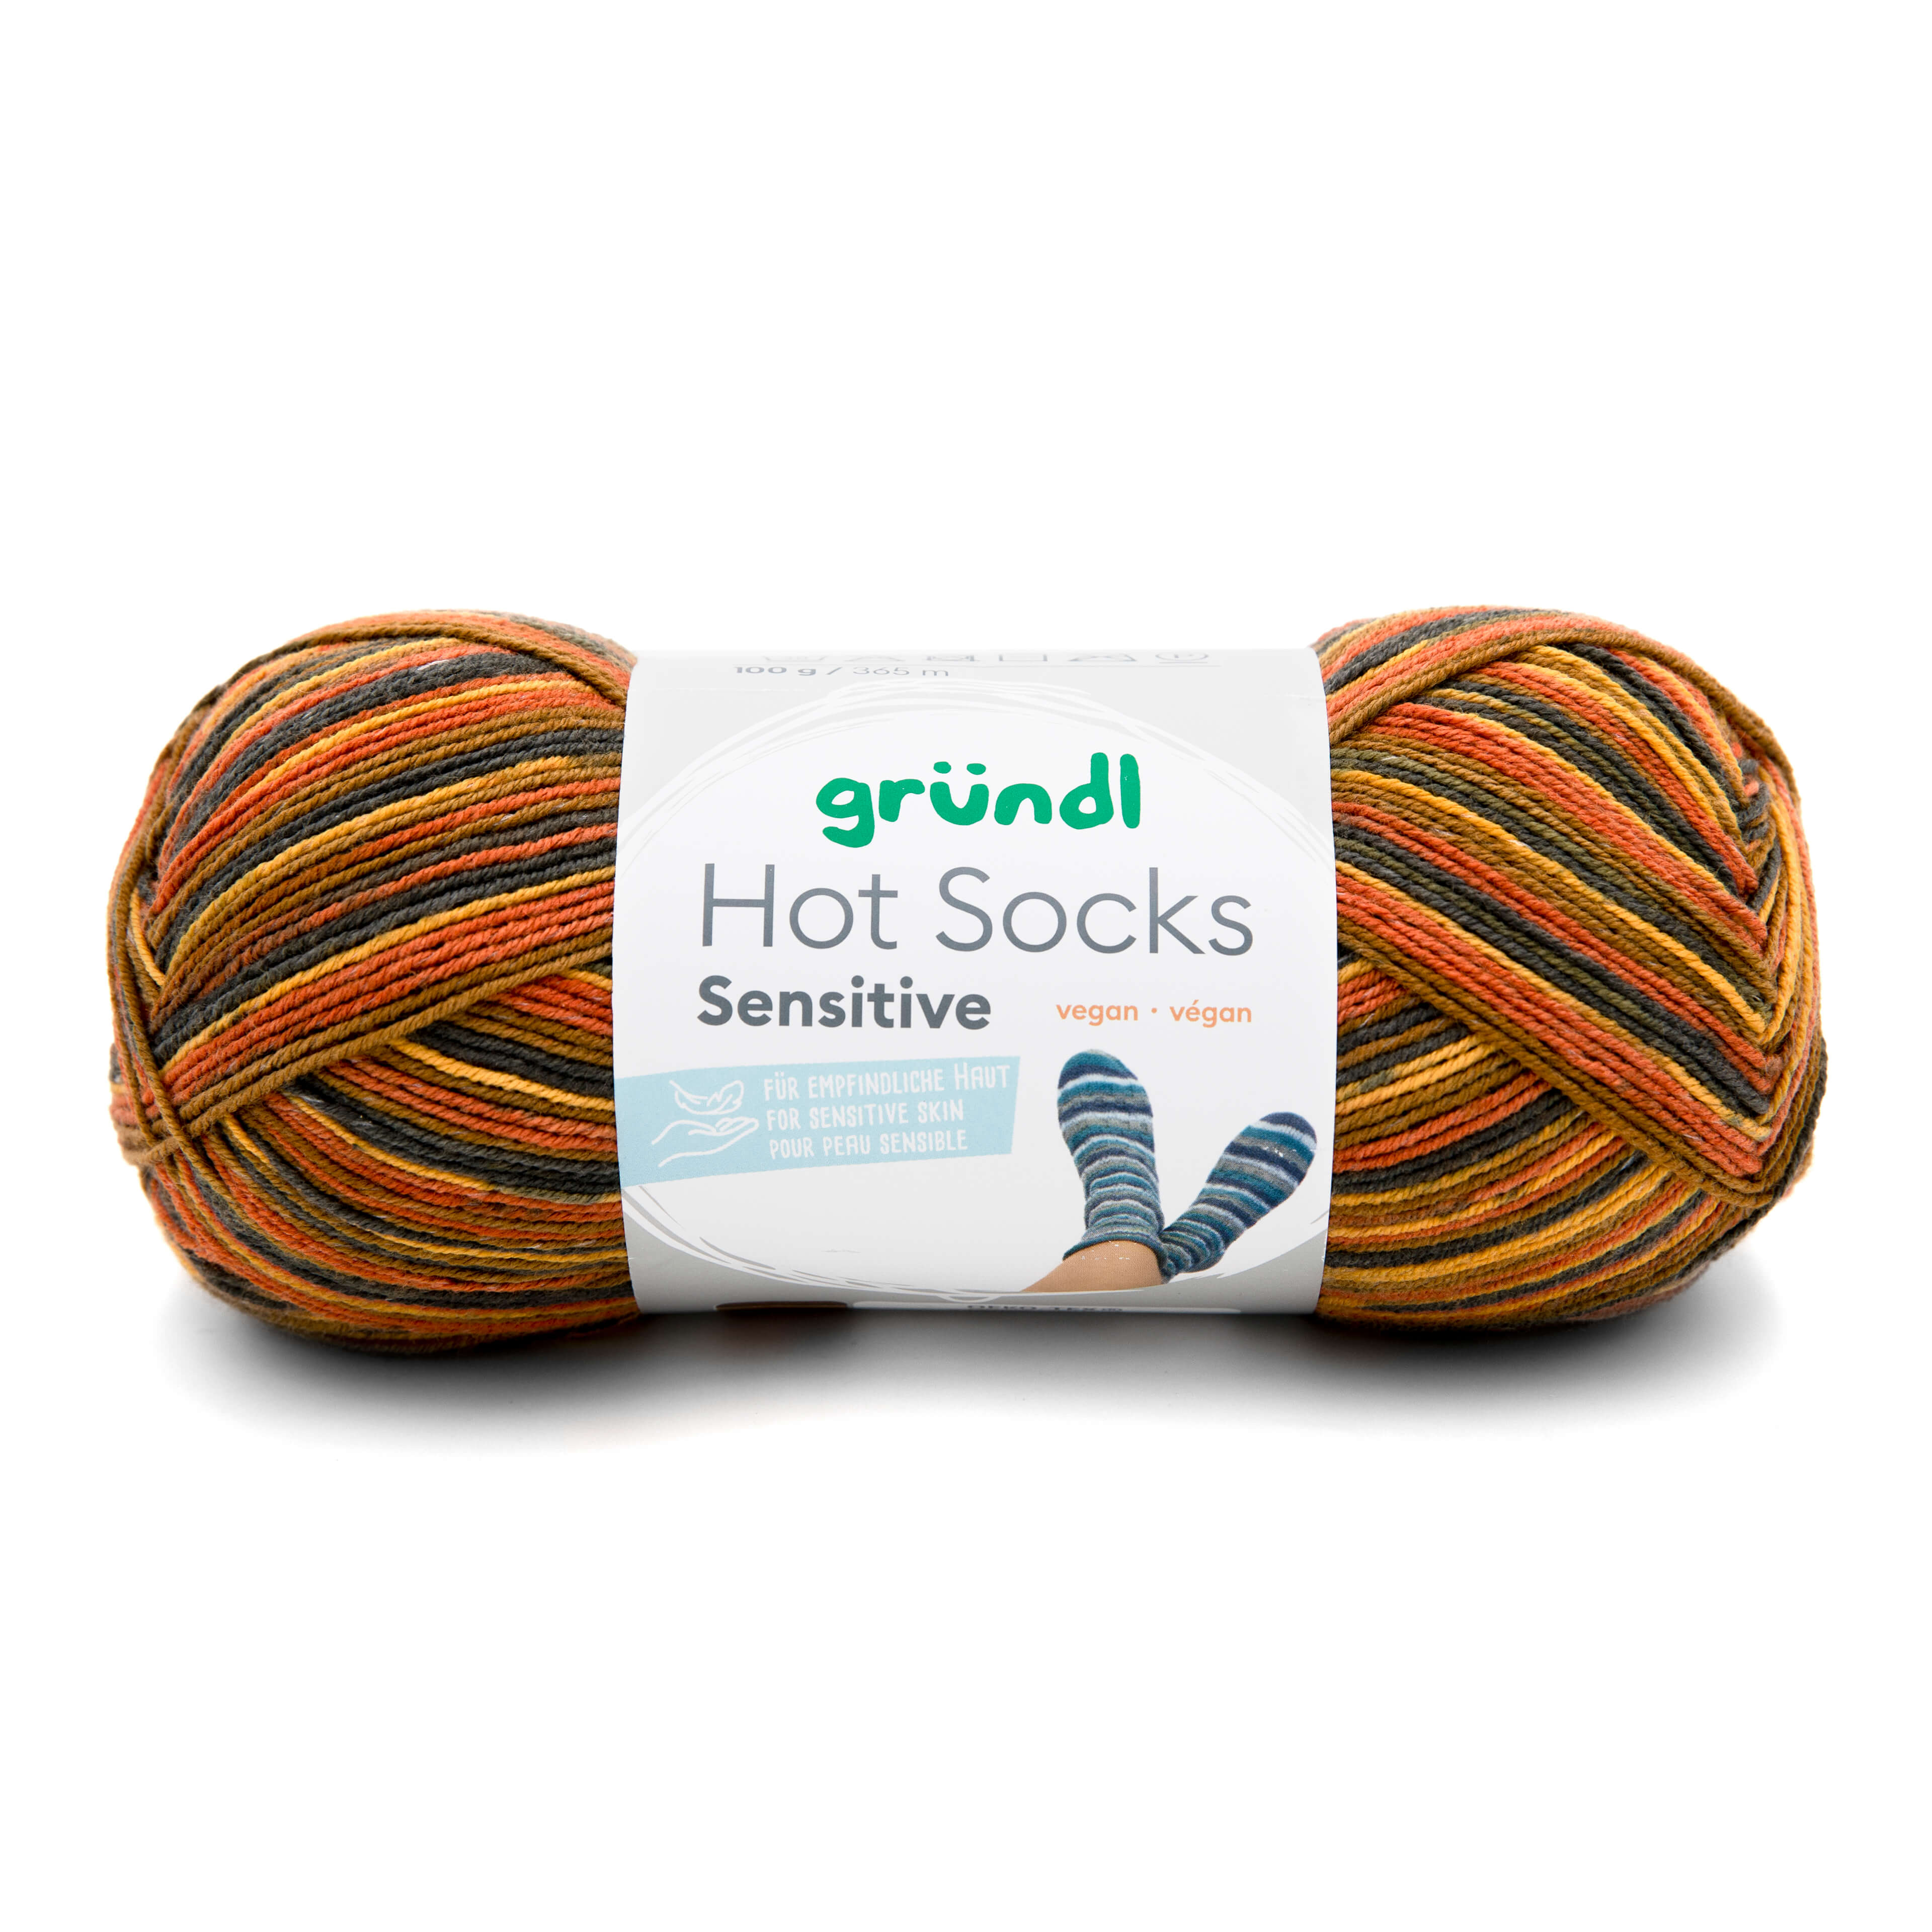 Hot Socks Sensitive